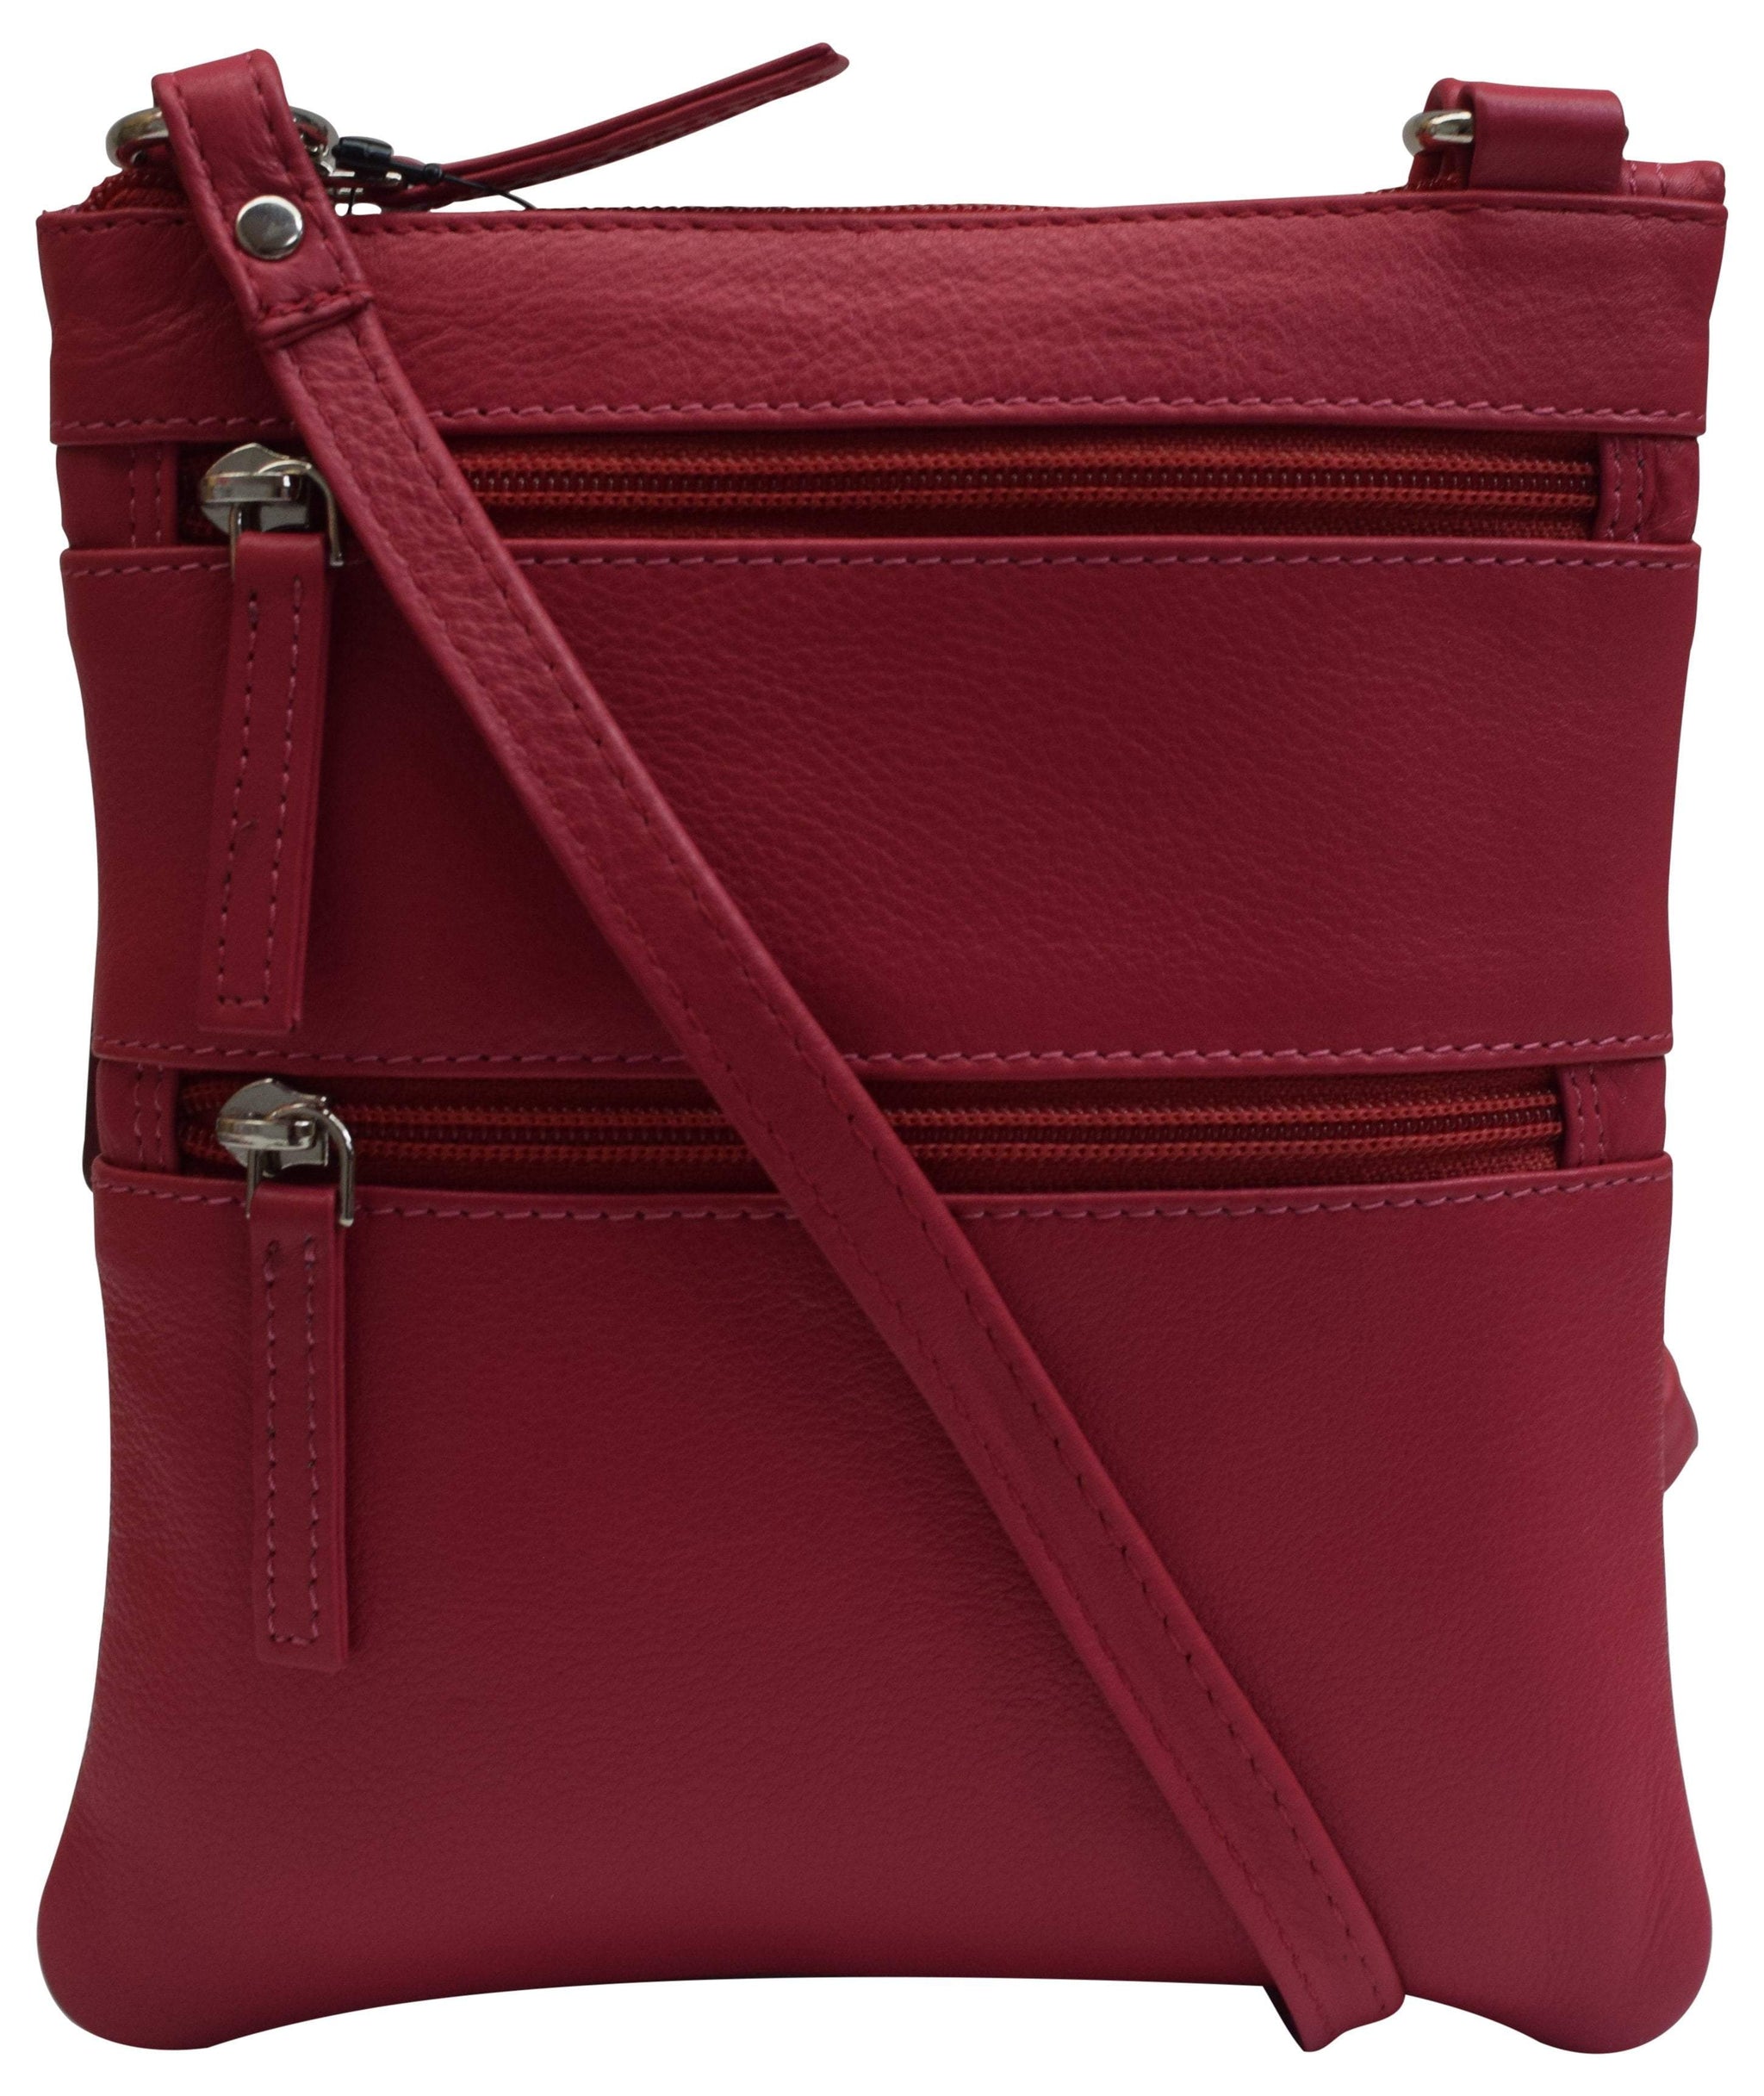 Designer Crossbody Bags – Lord & Taylor